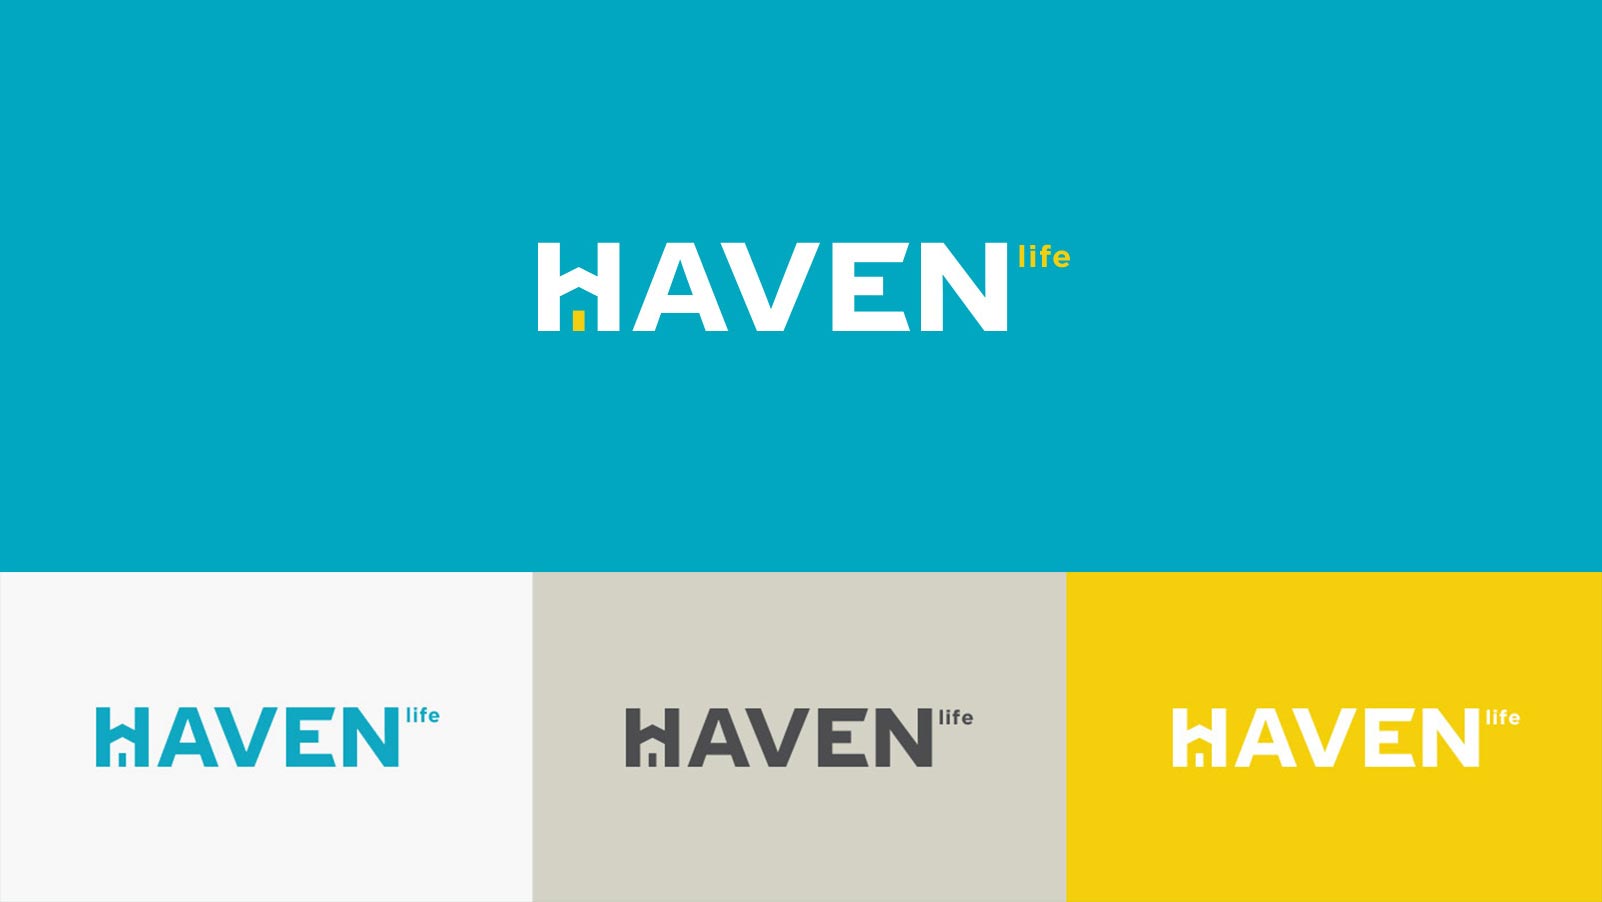 HavenLife_Branding_small